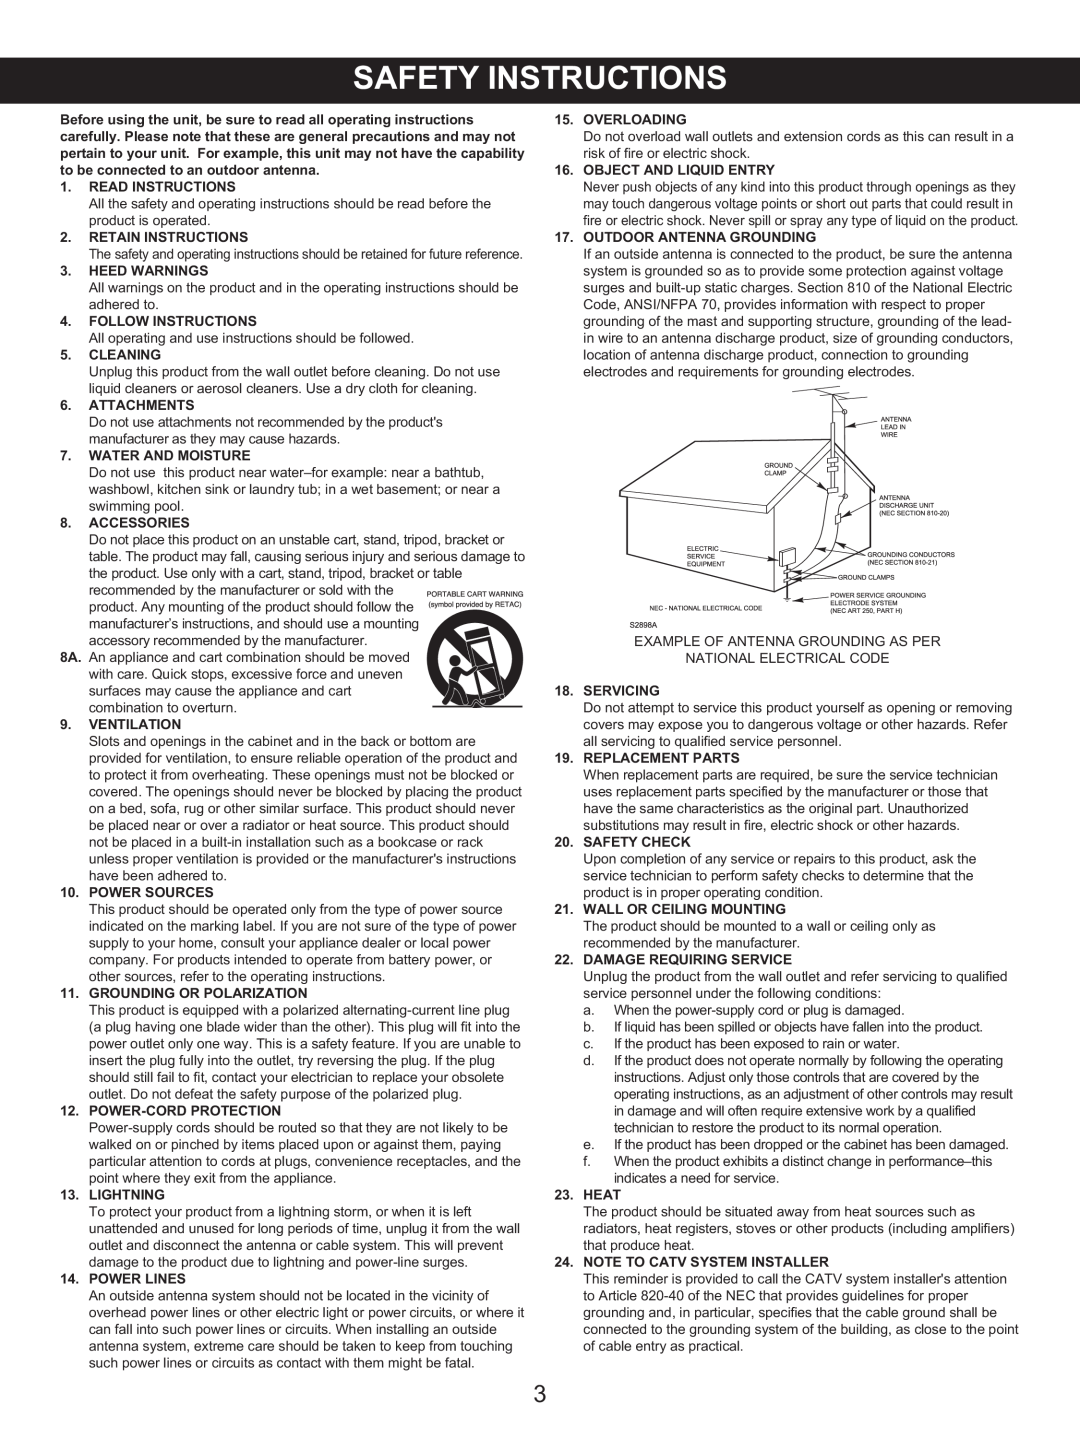 Memorex MKS8590 manual Read Instructions 